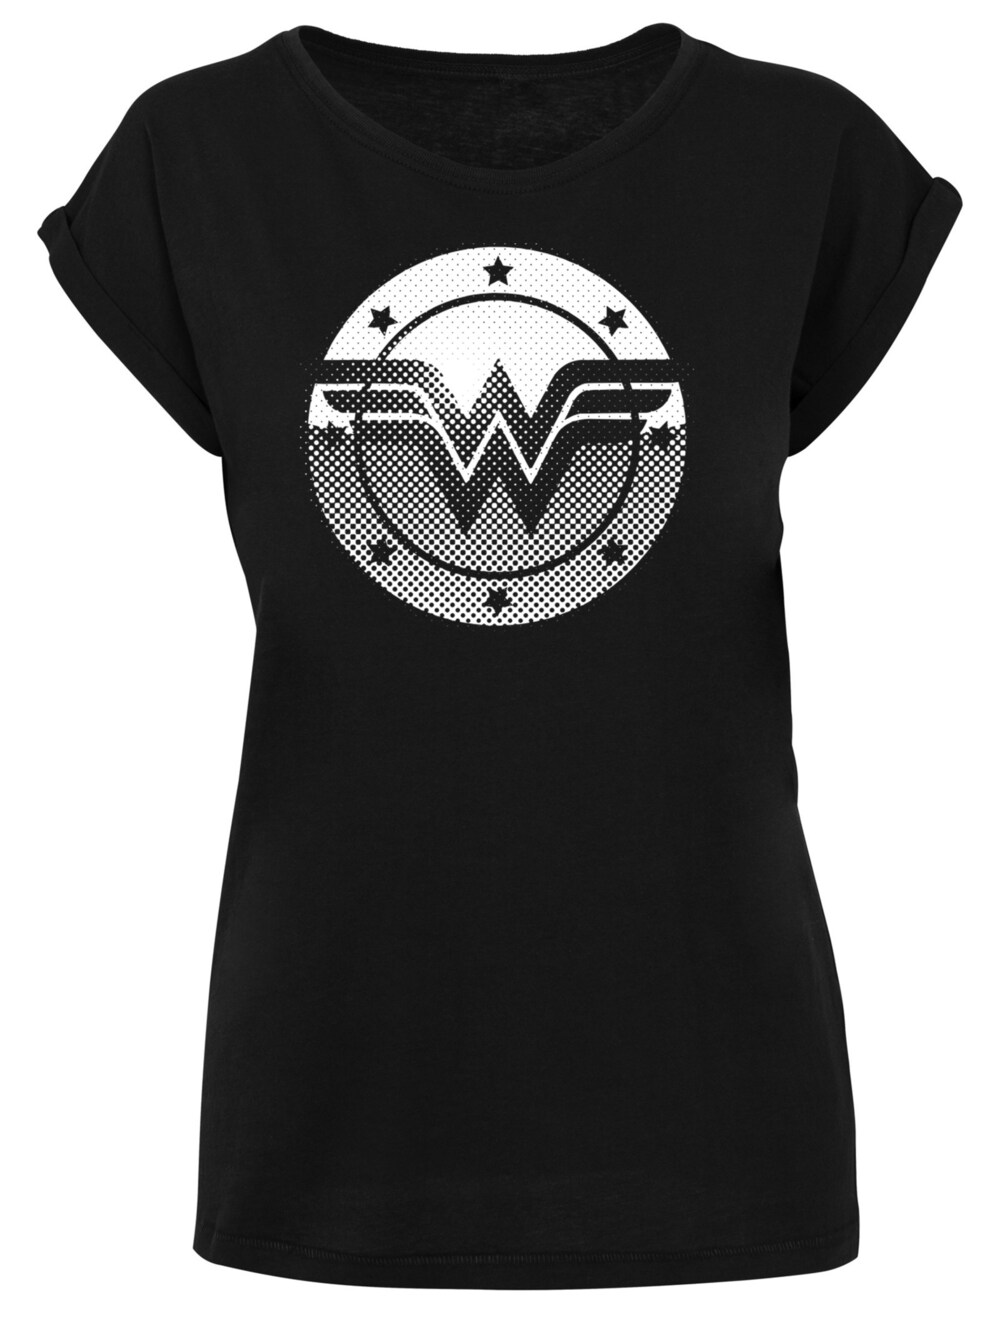 Рубашка F4Nt4Stic DC Comics Wonder Woman Spot Logo, черный рюкзак dc comics wonder woman logo aop canvas mini